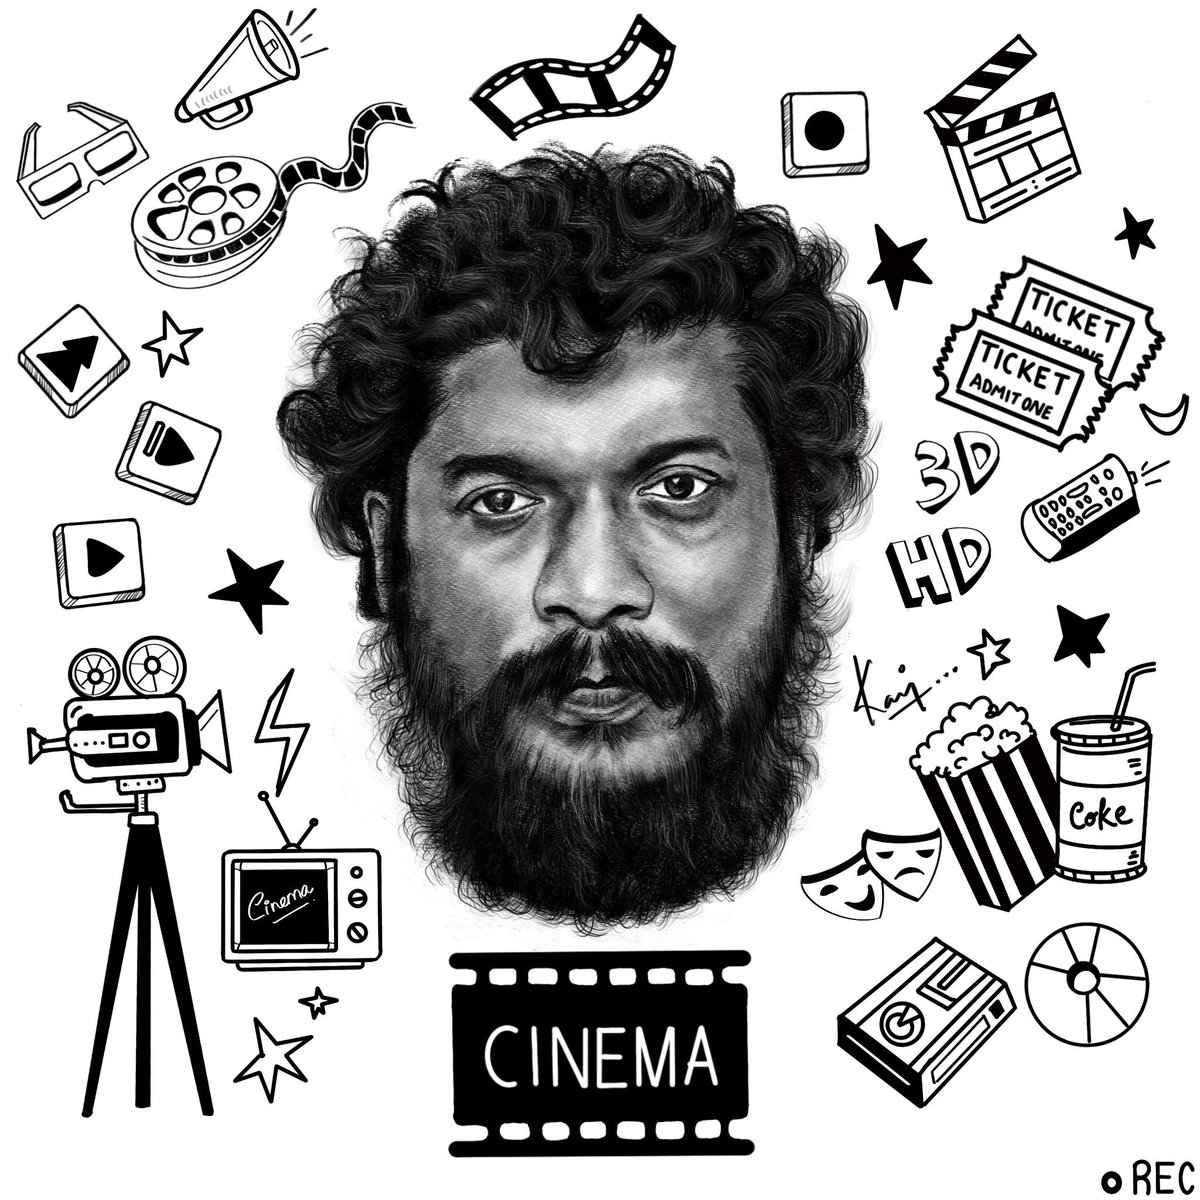 ✍️For the man who lived as Rajaakannu @Manikabali87 and best wishes for #goodnight movie #Manikandan #JaiBhim #JaiBhimOnPrime #JaiBhimreview #jaibhimalbum #ThalaKodhum #Suriya #Suriya42 #suriyasivakumar #cinema #TamilCinema #rajaakannu #COVIDIOTS @Suriya_offl @PrimeVideoIN